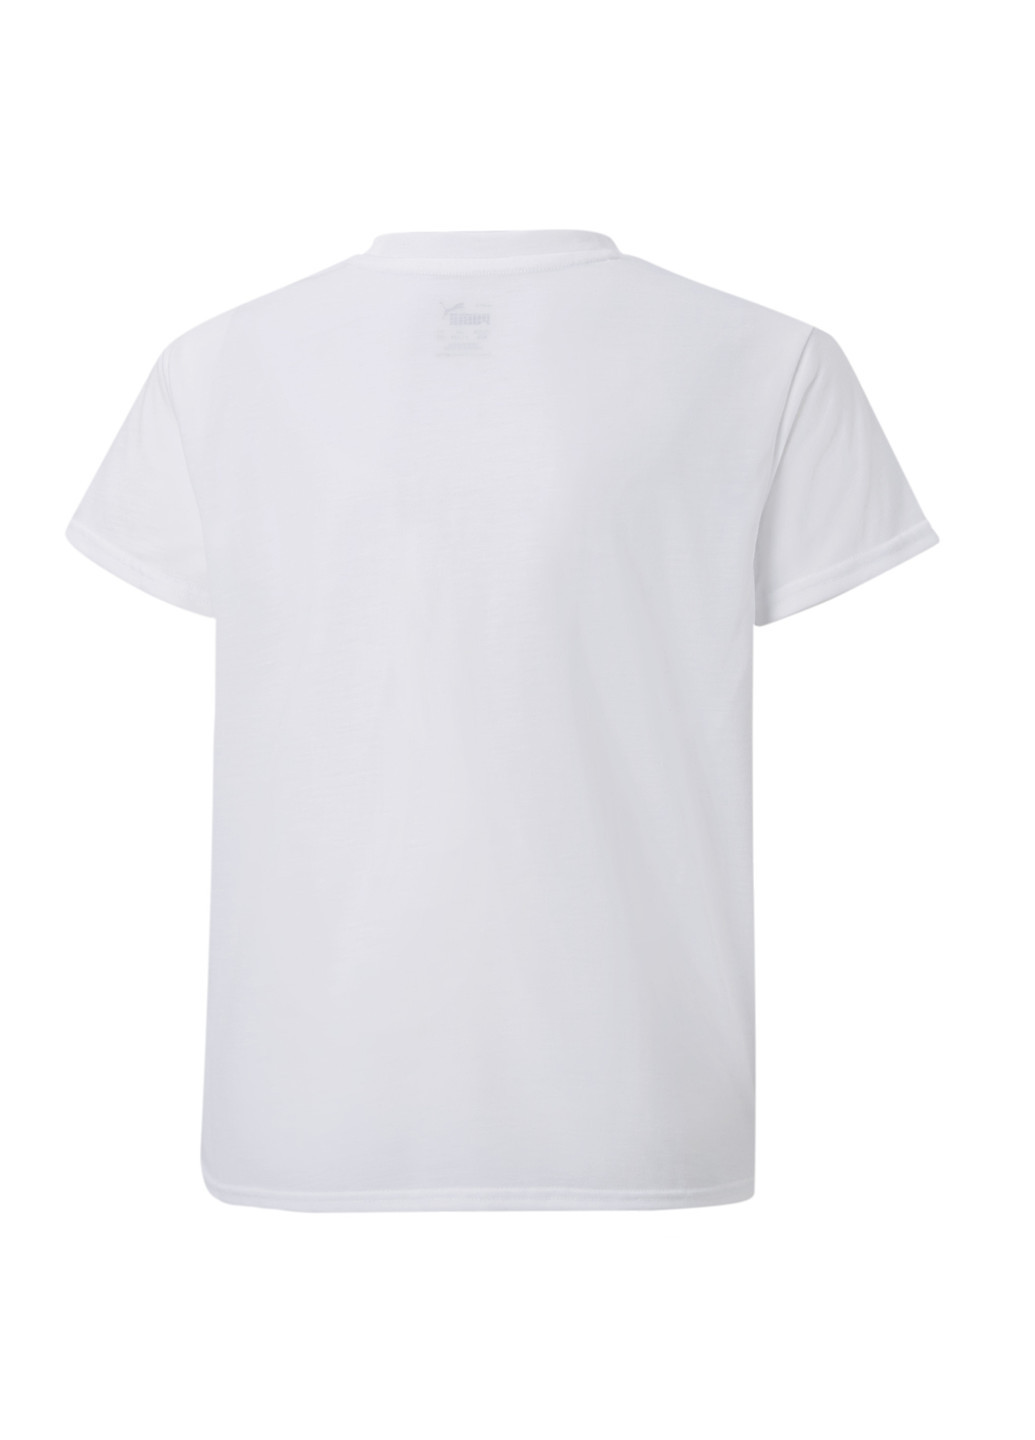 Детская футболка Modern Sports Youth Tee Puma однотонная белая спортивная модал, полиэстер